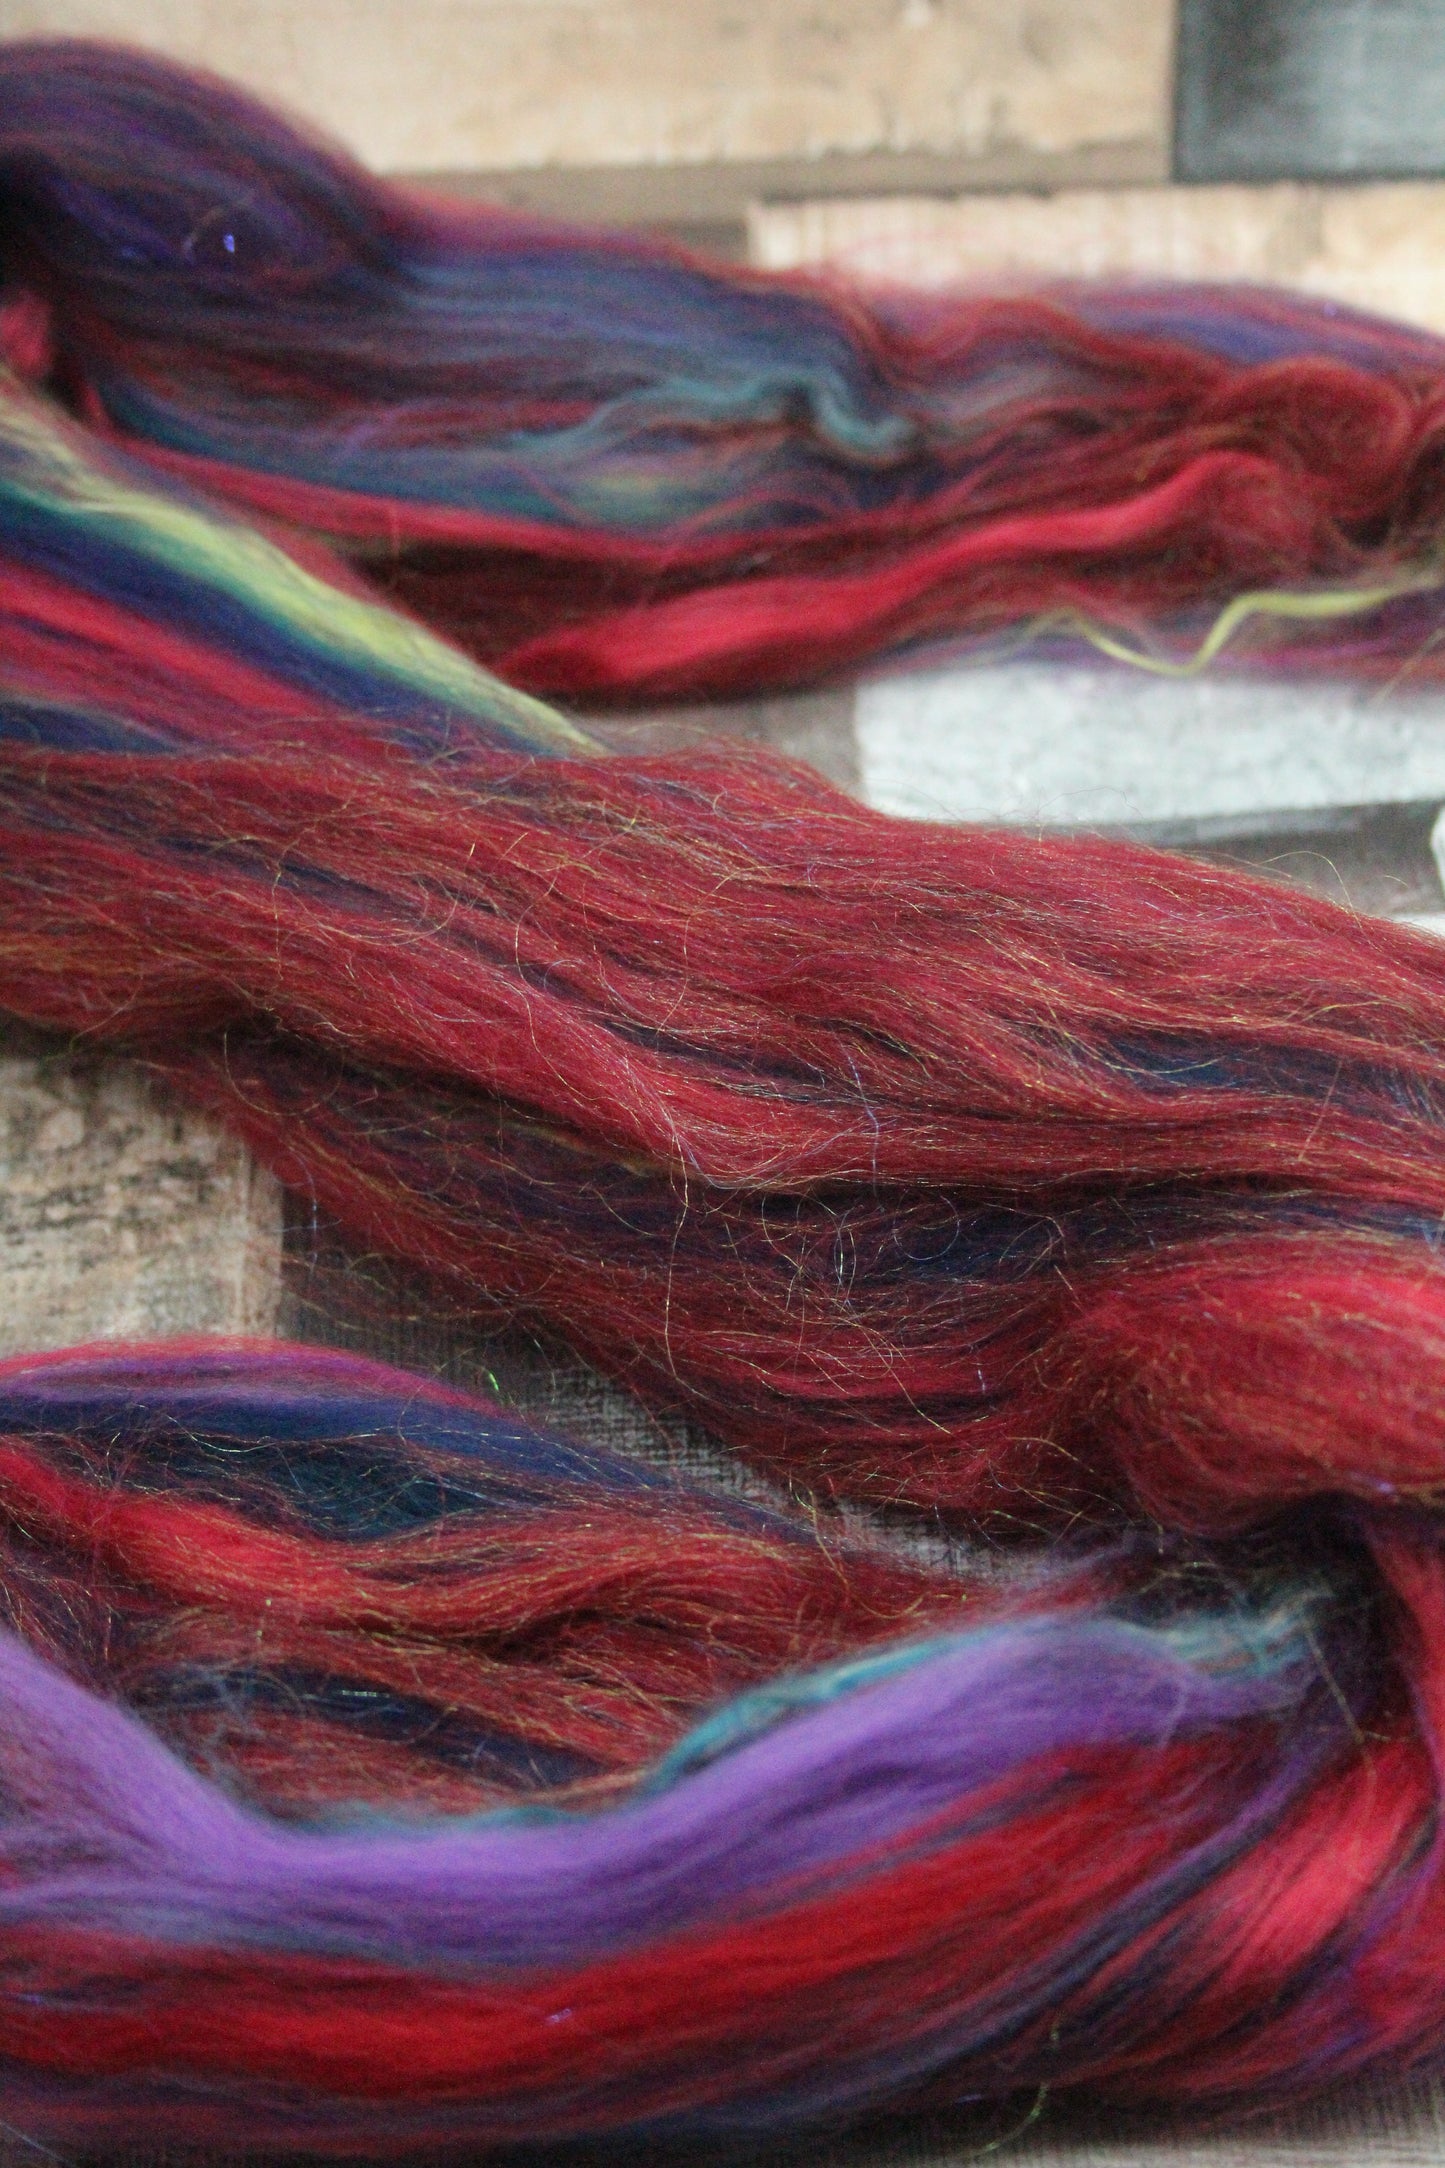 Wool Blend - Red Purple Blue Green - 27 grams / 0.9 oz  - Fibre for felting, weaving or spinning